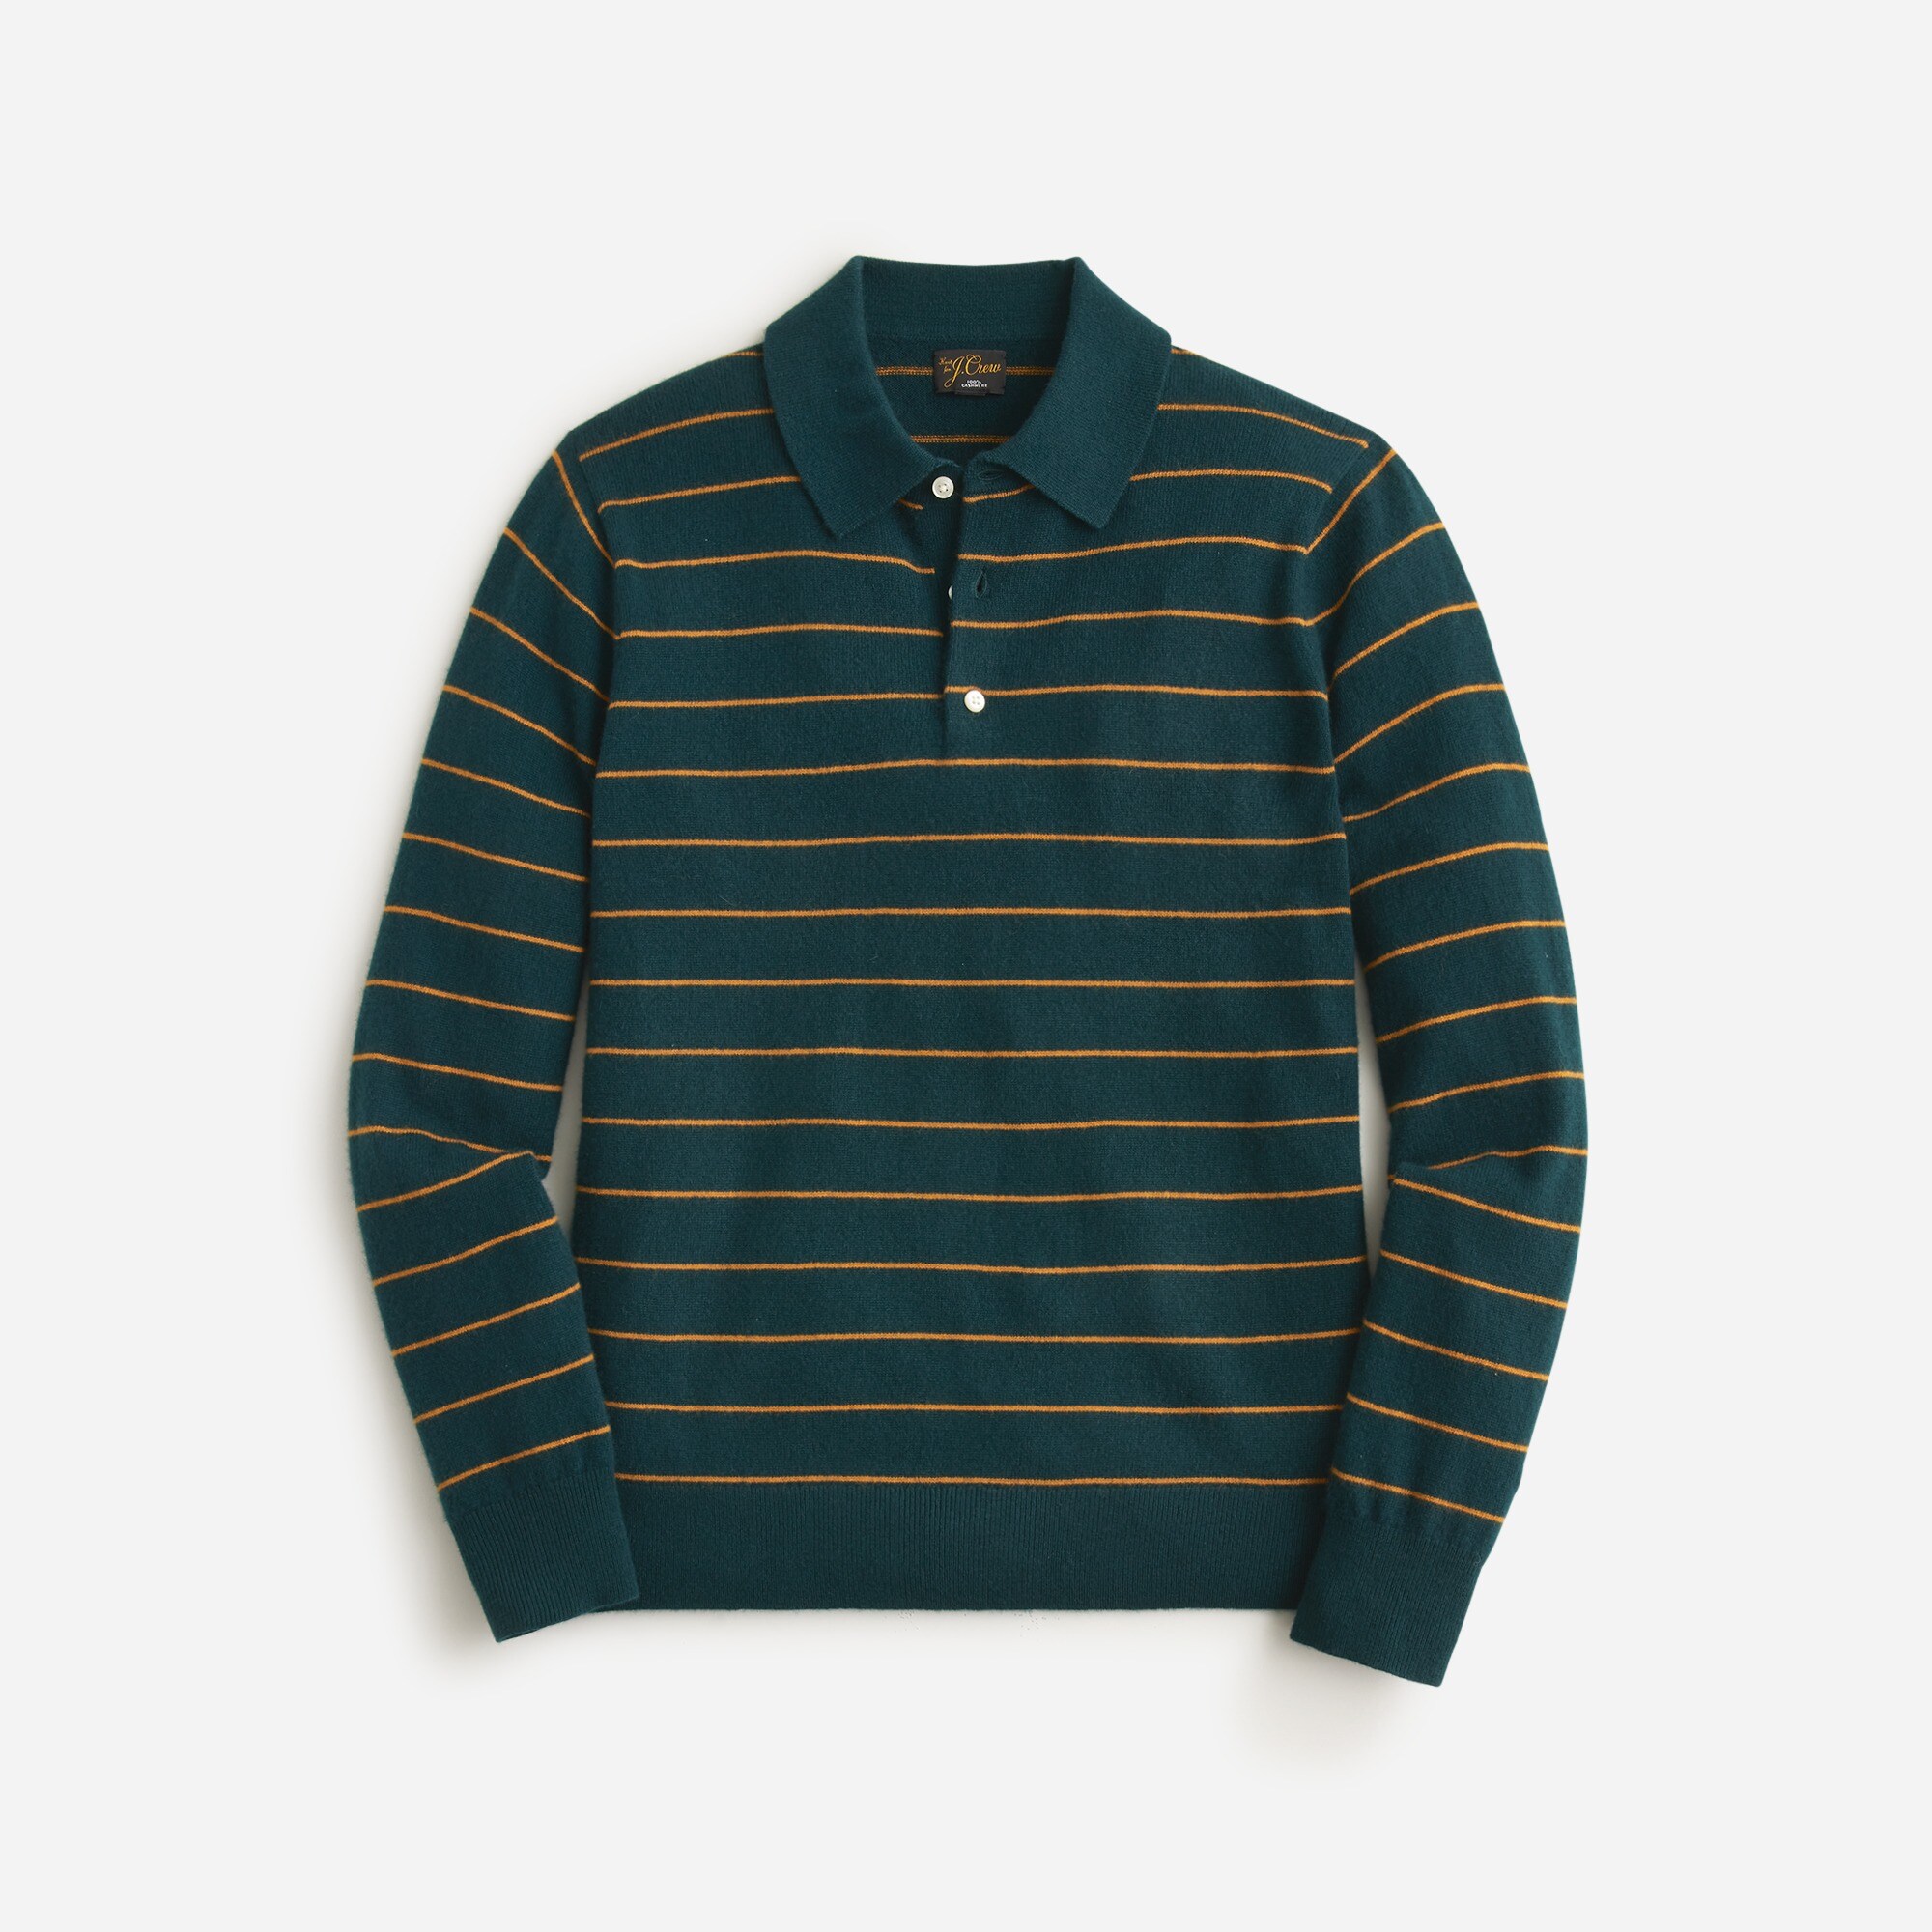  Cashmere collared sweater in stripe